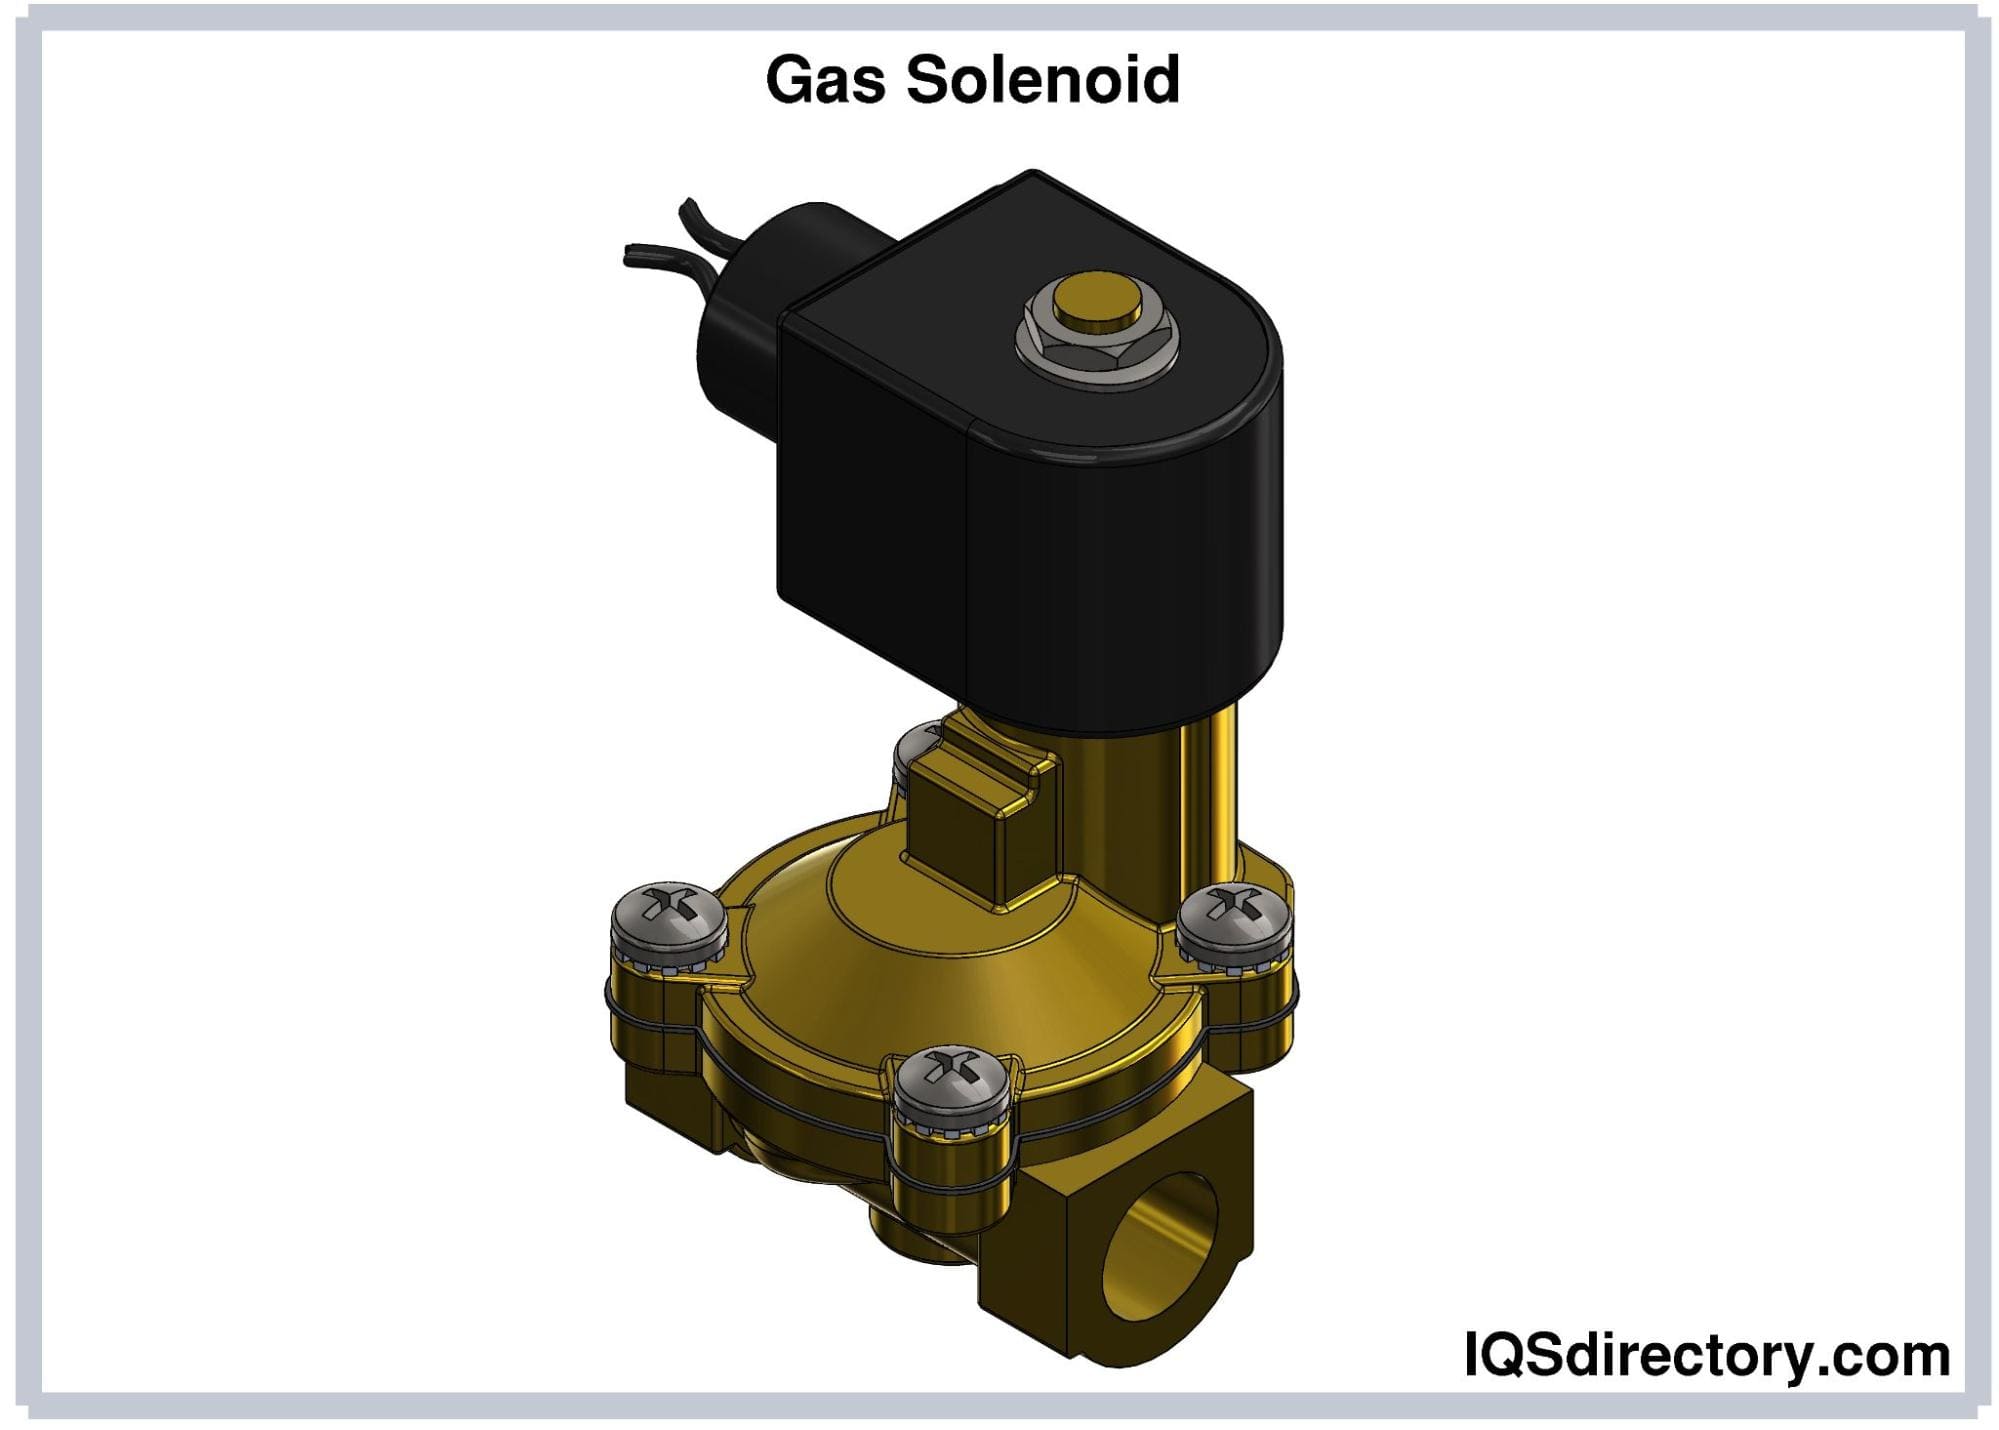 Gas Solenoid